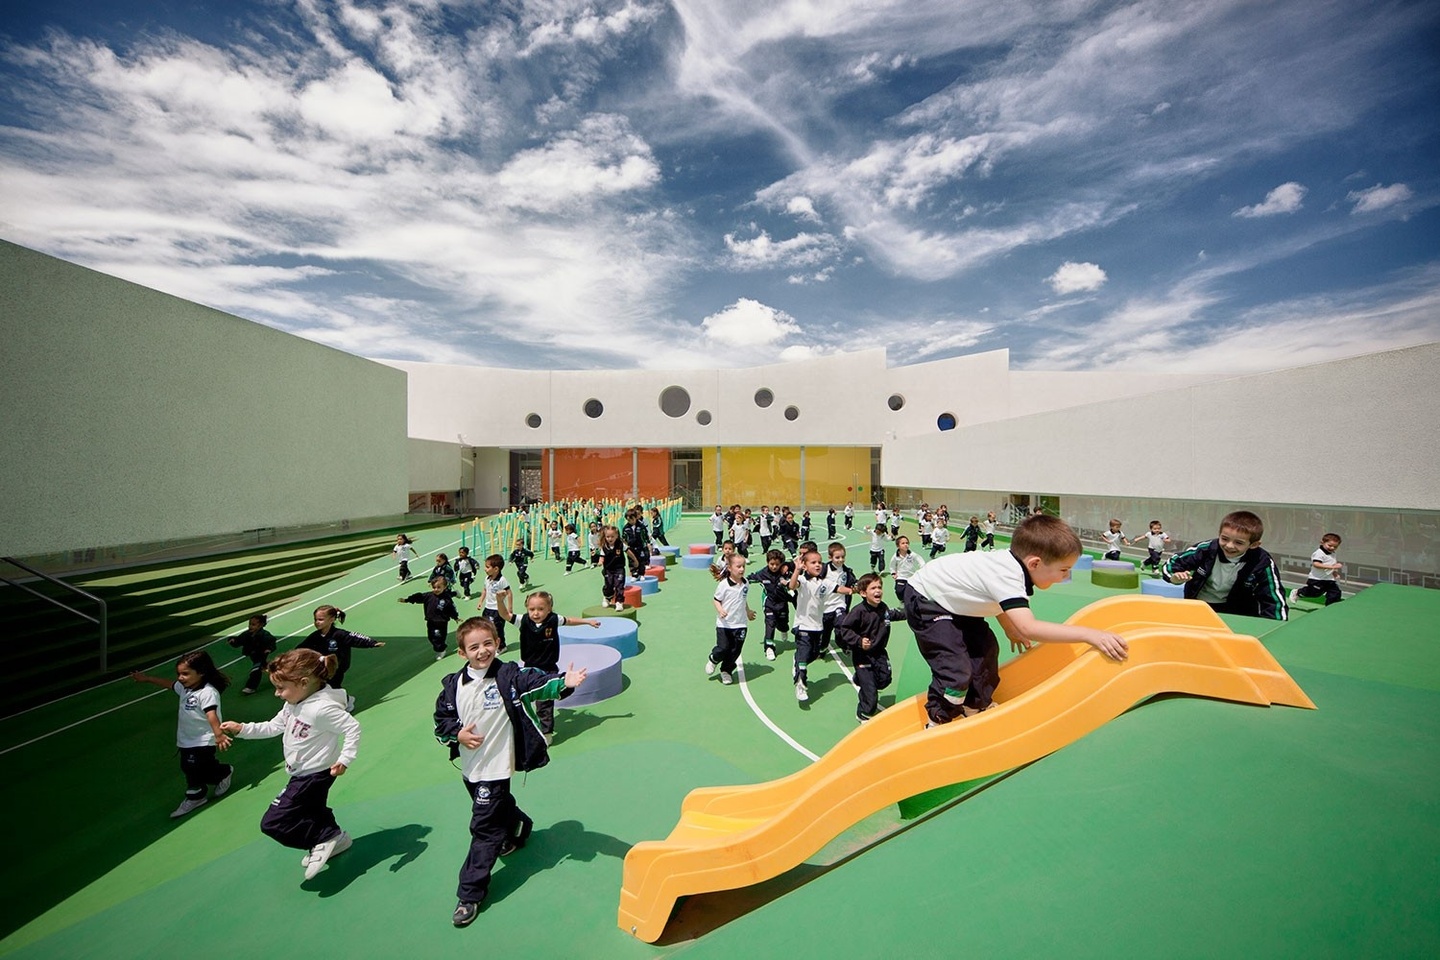 Courtyard playground with children playing